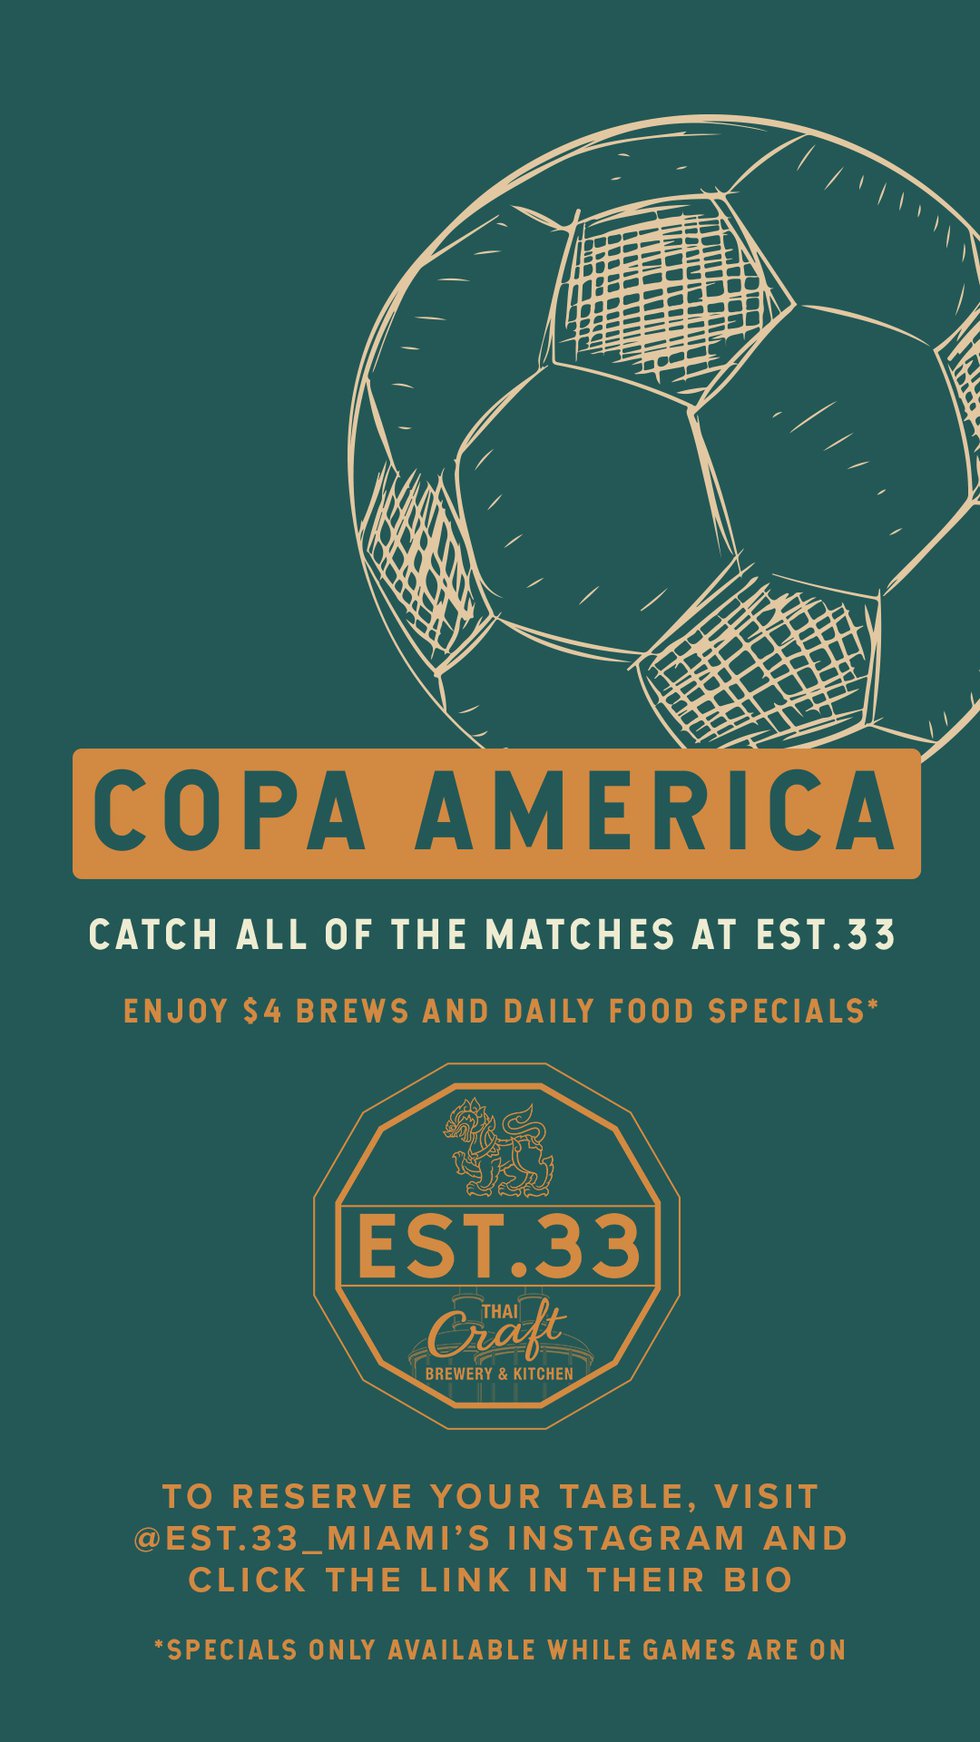 EST.33_Copa America_Teal.jpg